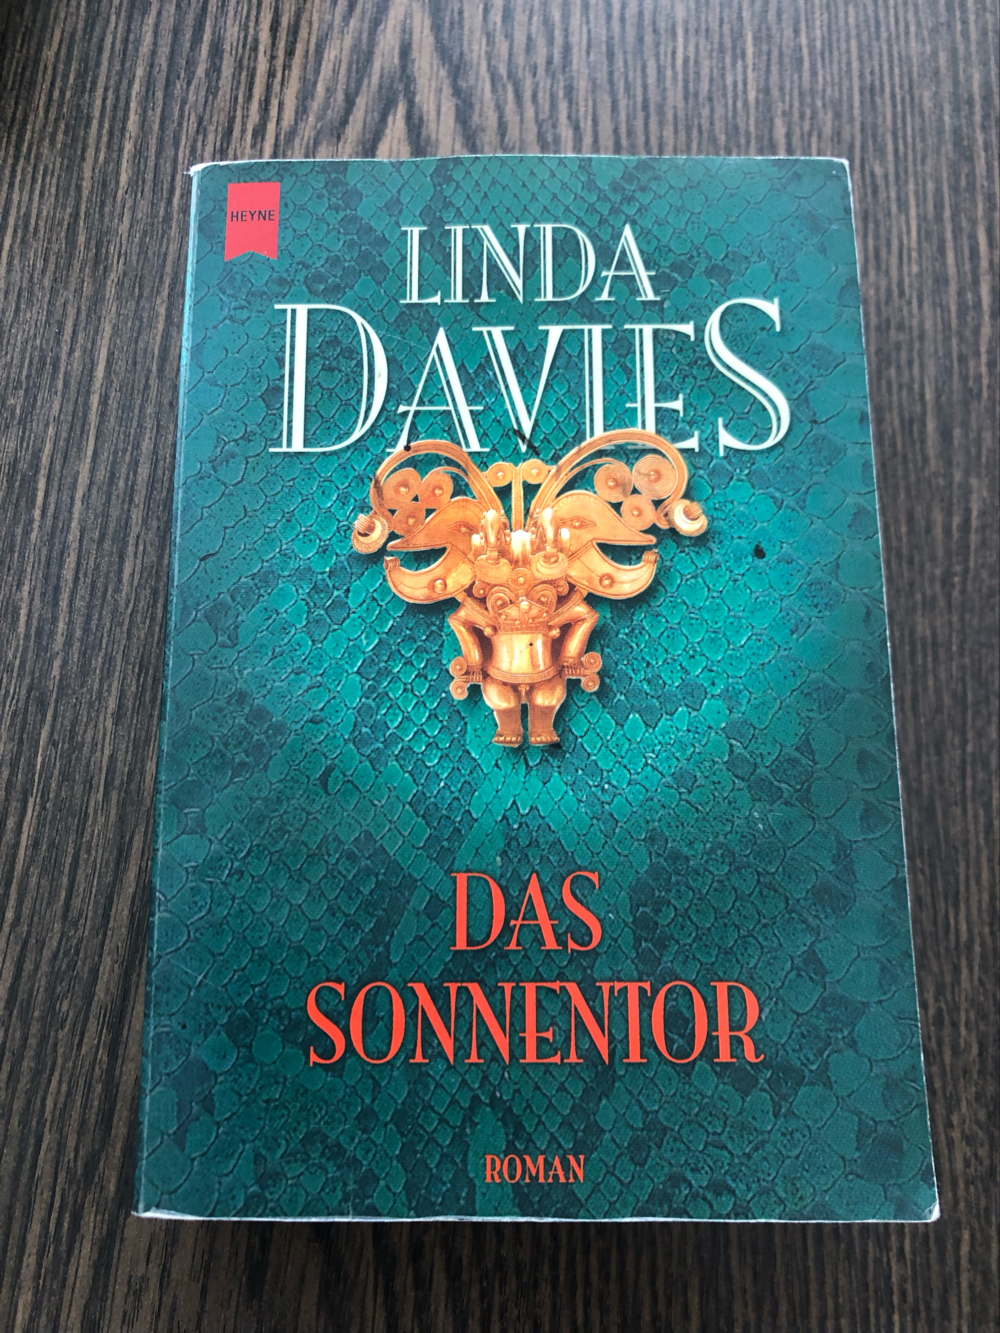 Das Sonnentor, Linda Davies